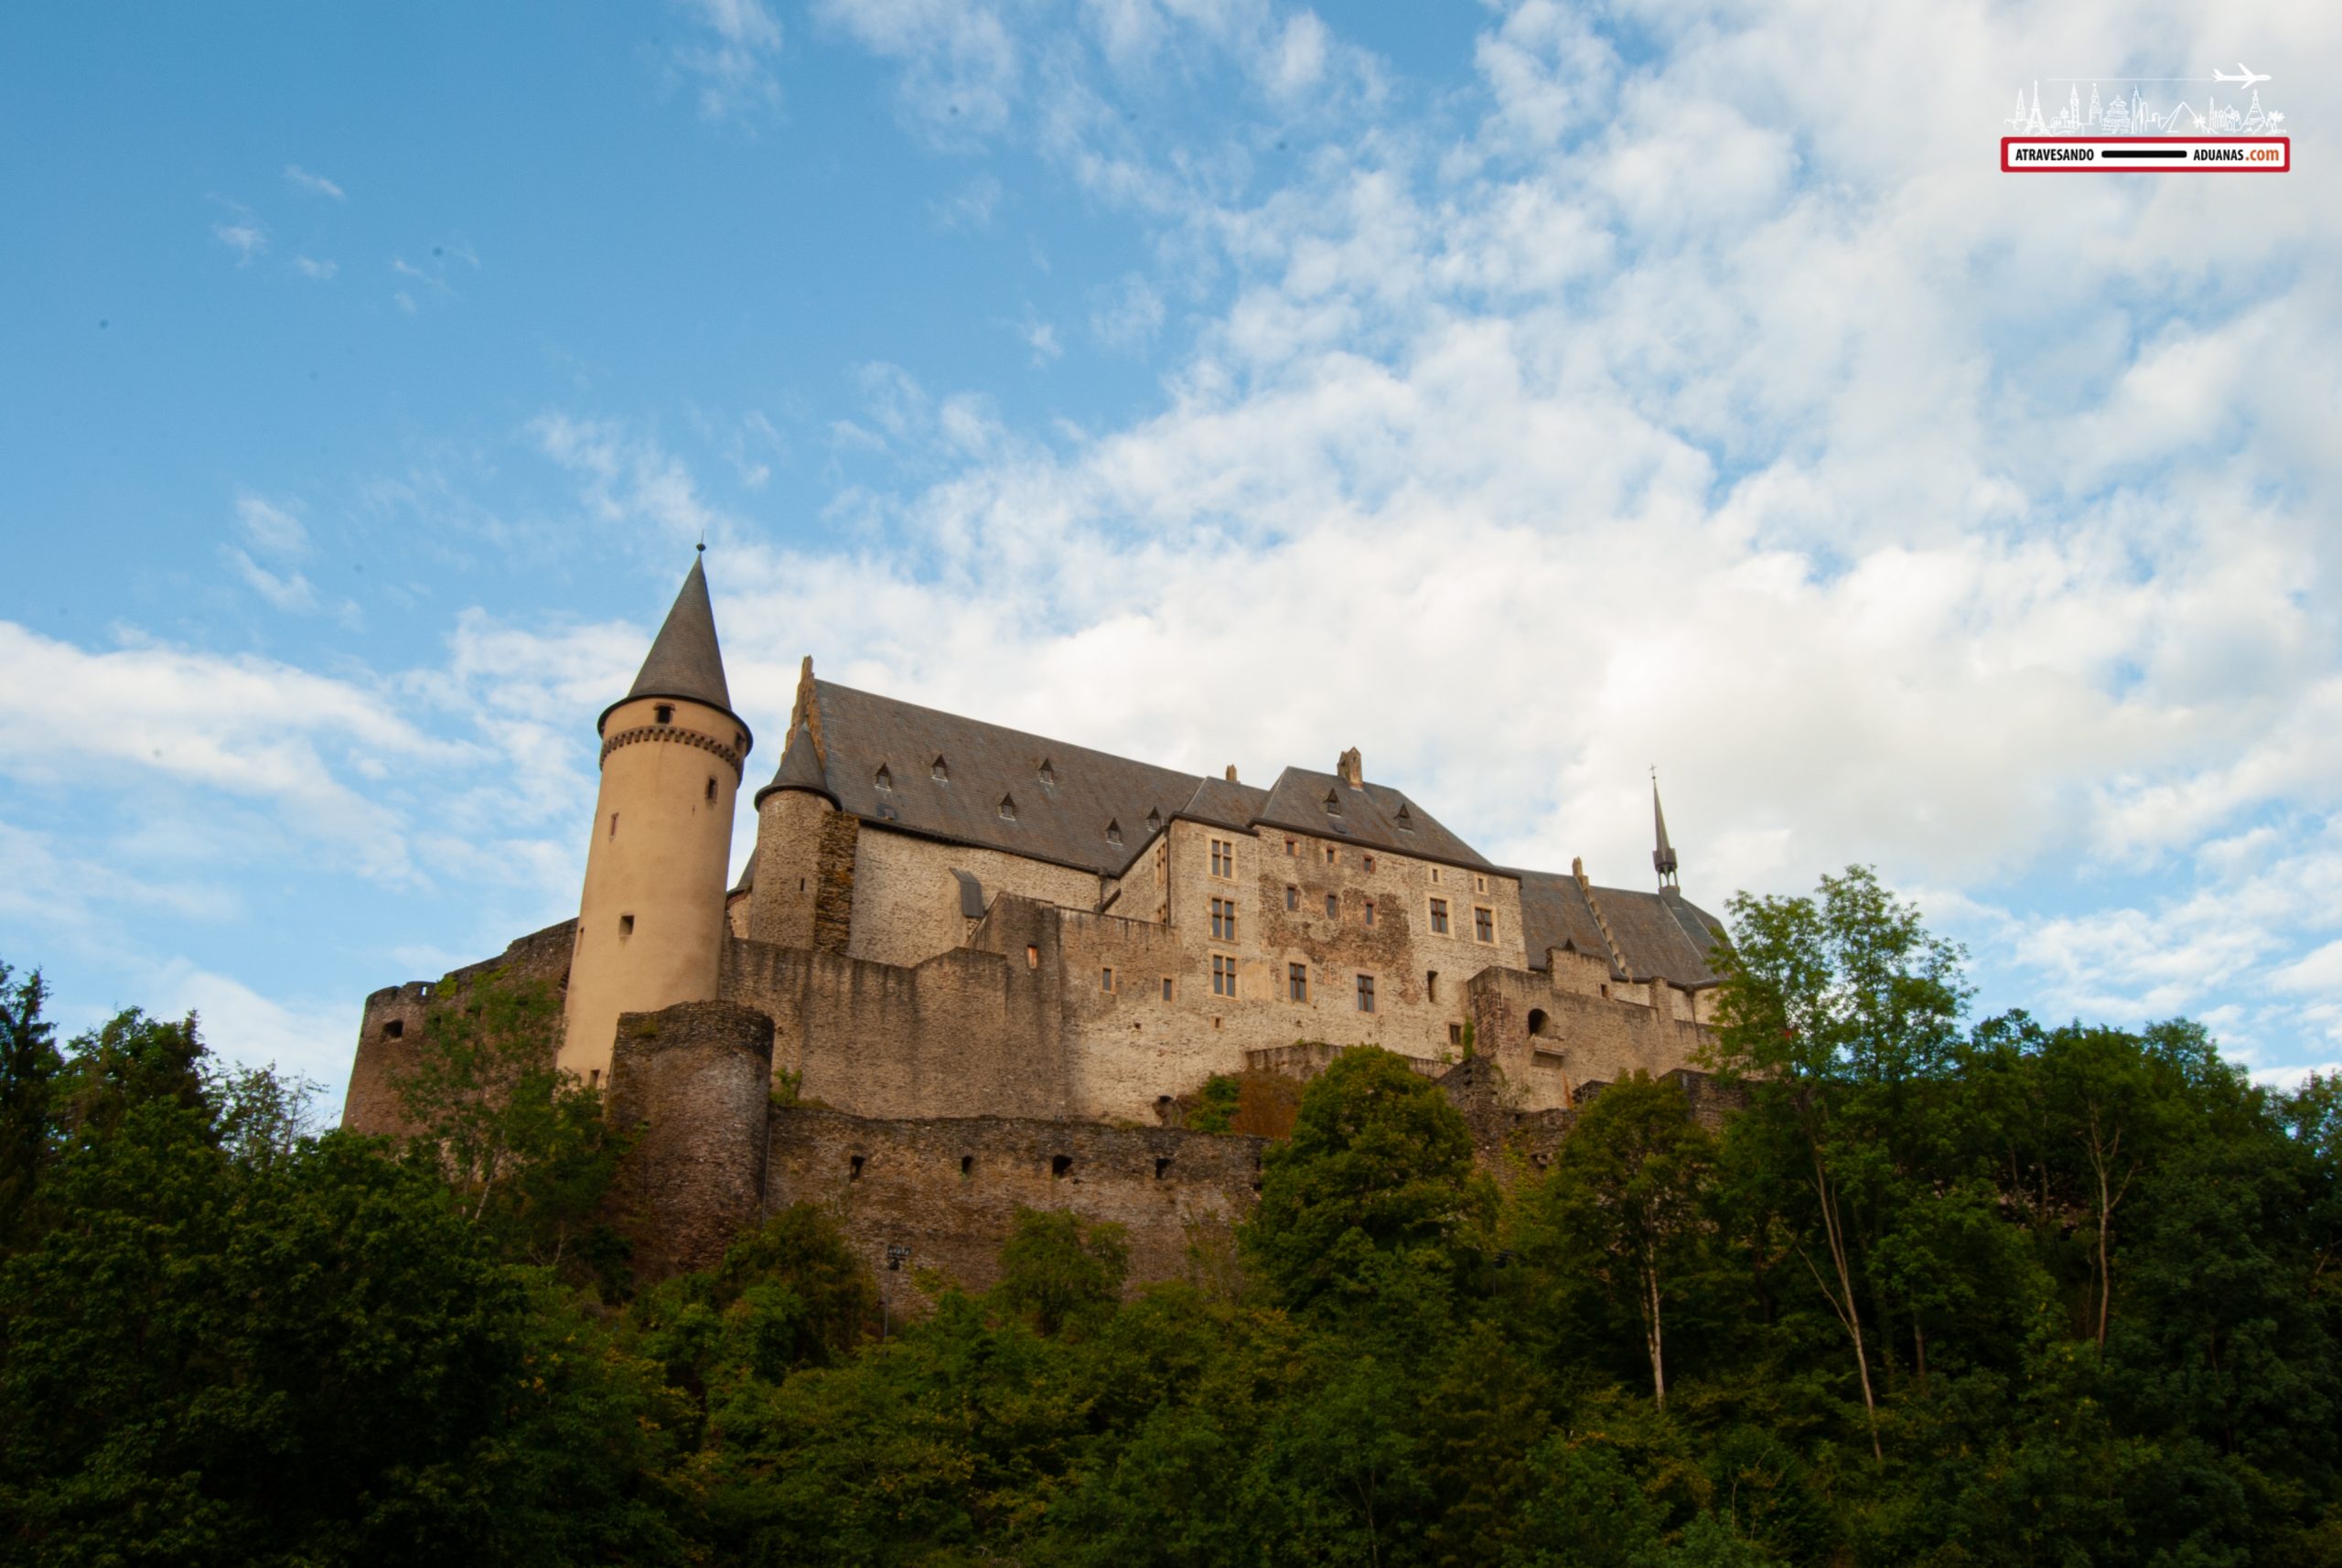 Castillo de Vianden